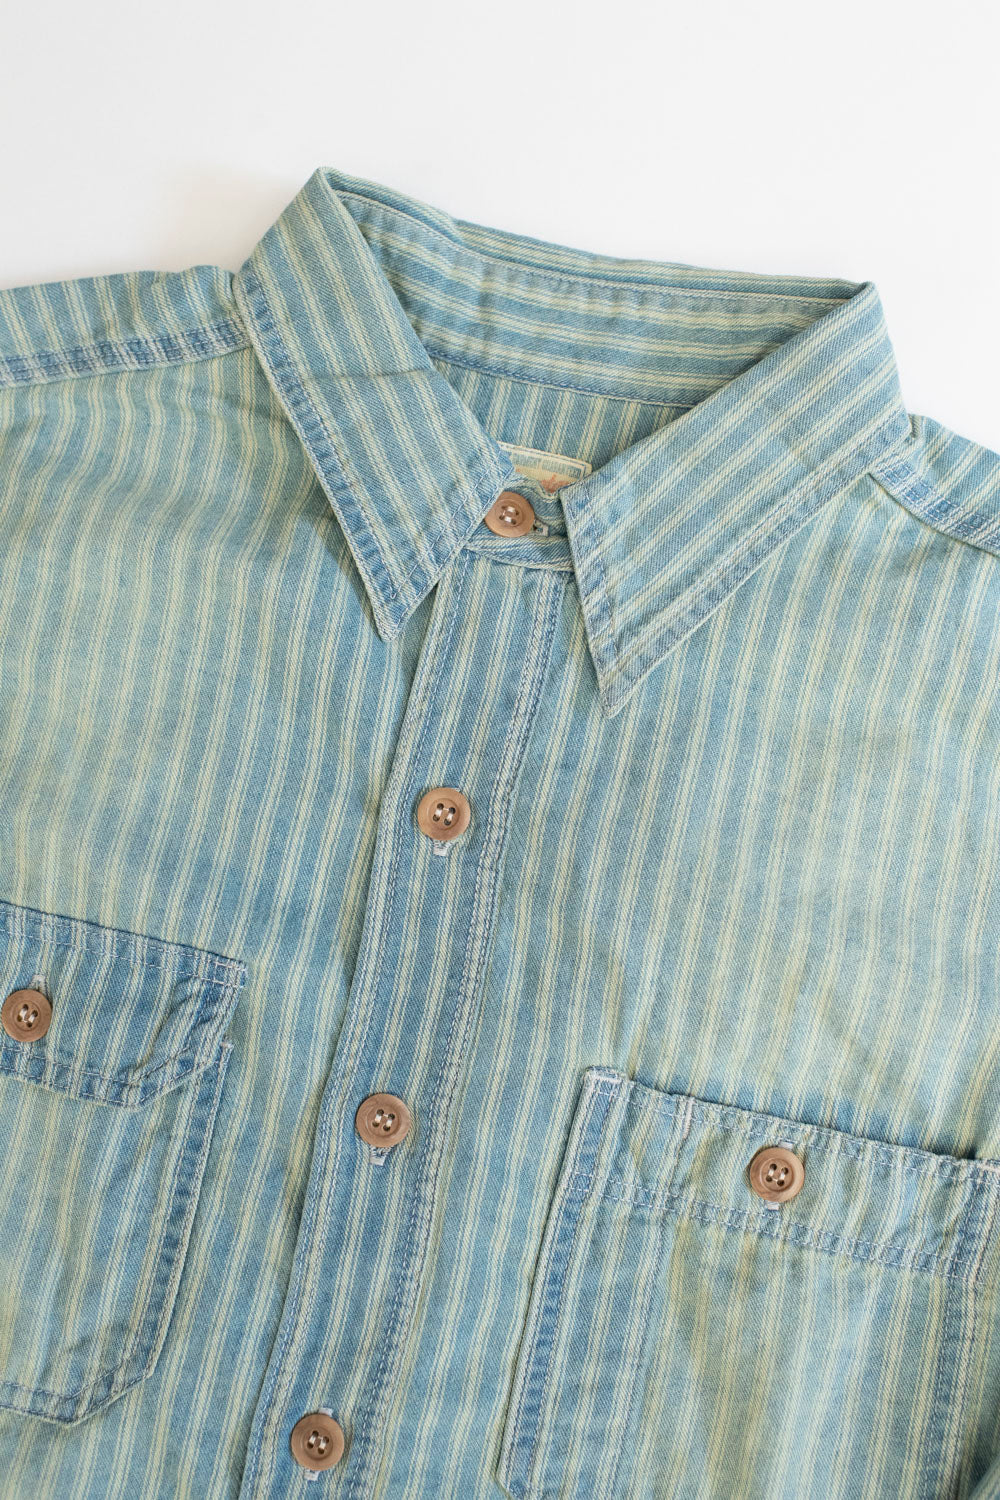 MLS1070M31 - Indigo Striped Work Shirt - Bleach Used